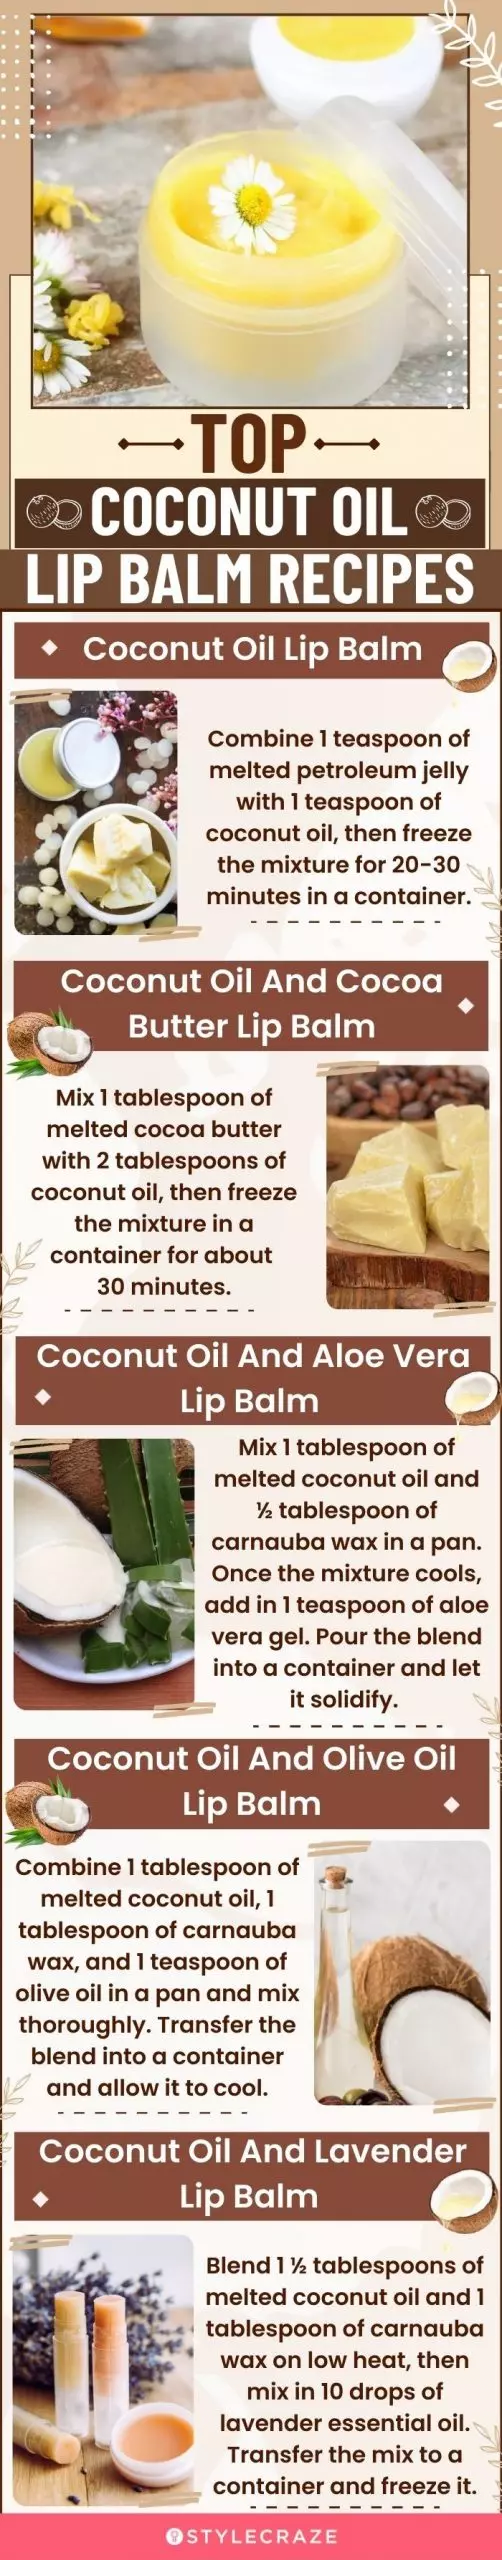 top coconut oil lip balm recipes (infographic)